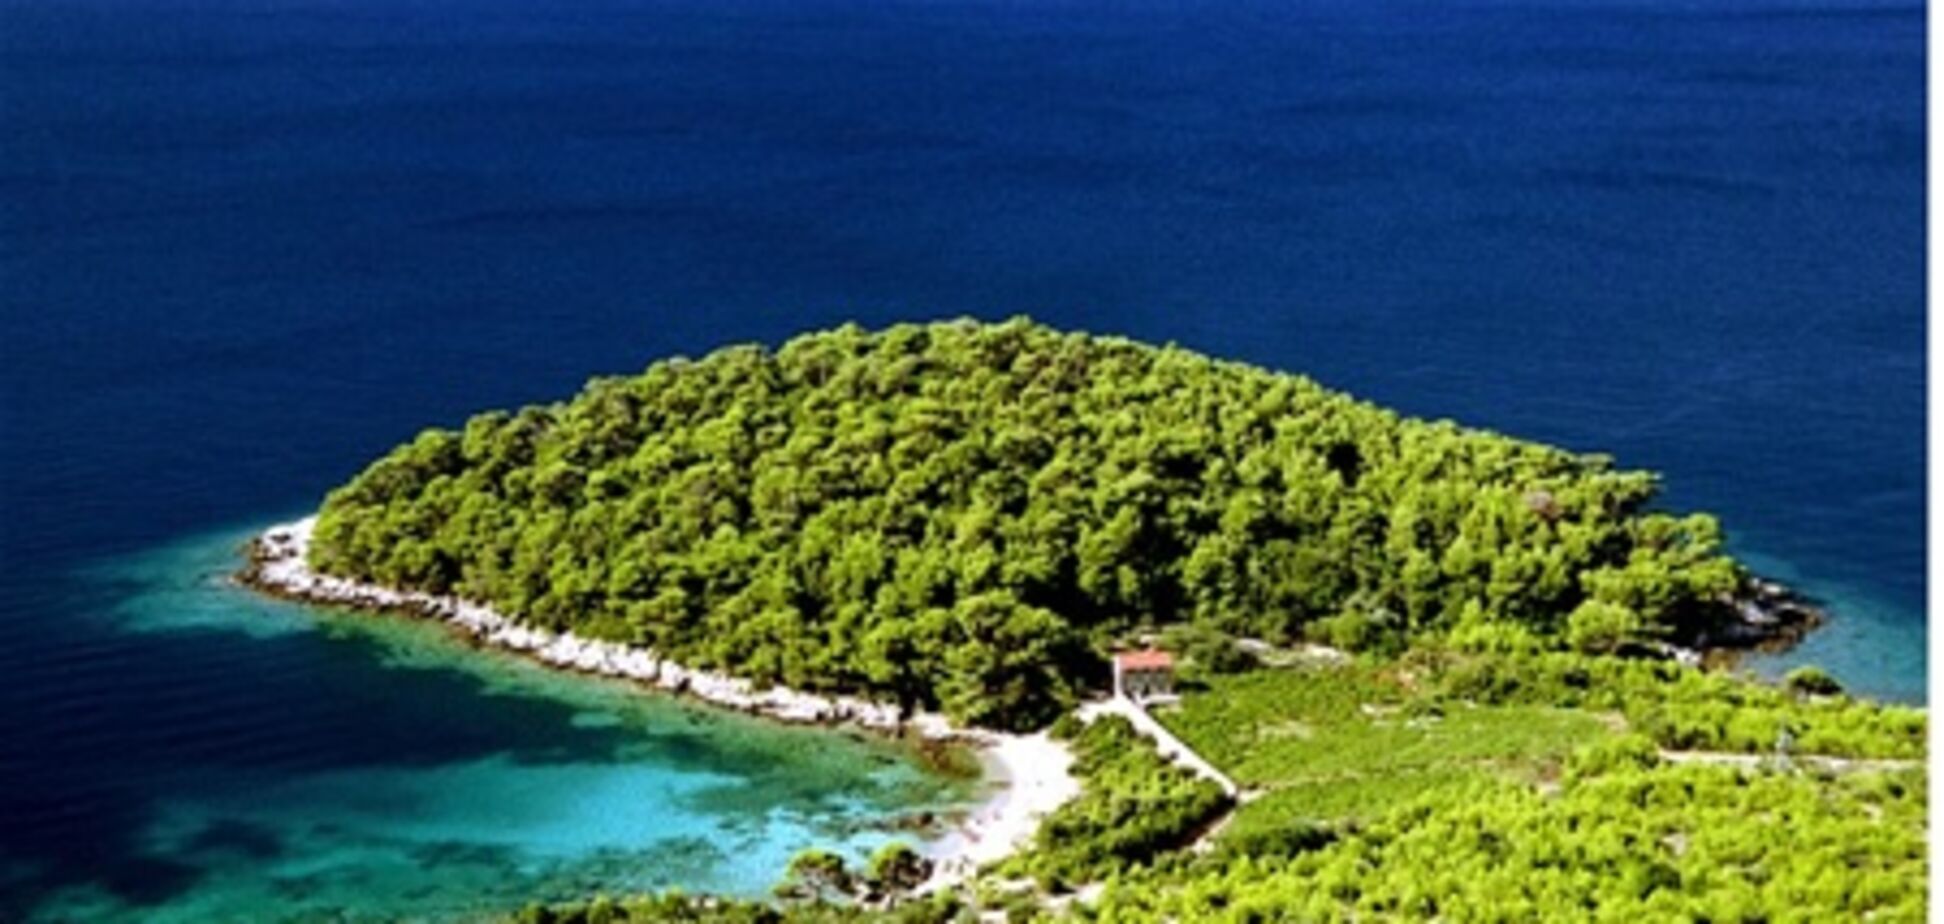 Хорватия «оживит» свои острова